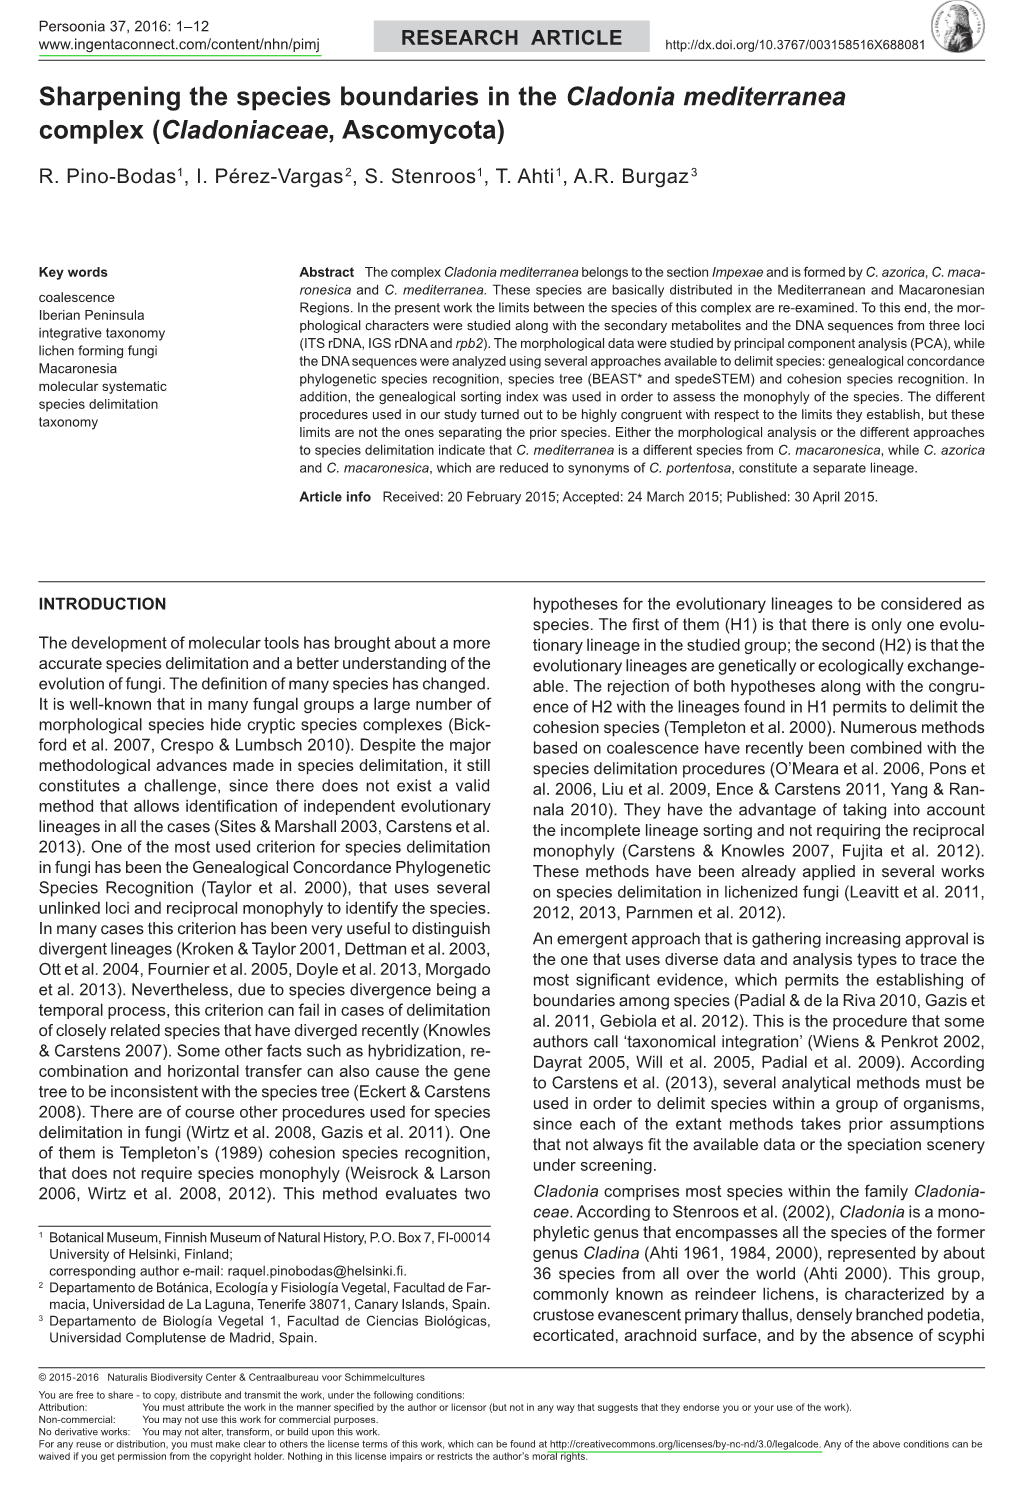 Sharpening the Species Boundaries in the Cladonia Mediterranea Complex (Cladoniaceae, Ascomycota)